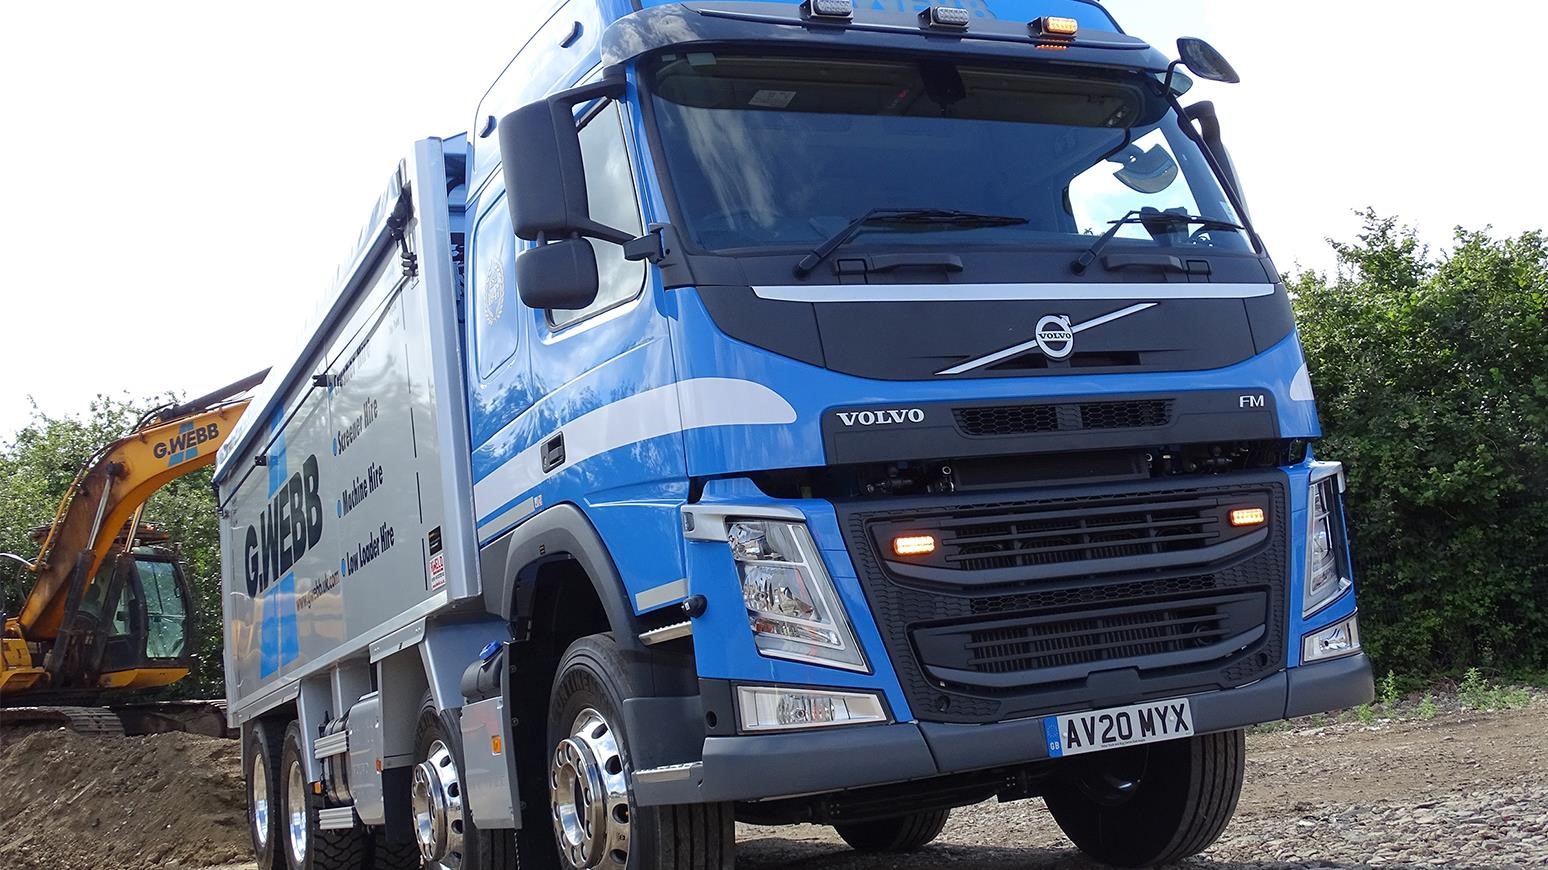 Cambridgeshire-Based G. Webb Haulage Purchases Volvo FM 8x4 Rigid Truck With Lifting Rear Axle